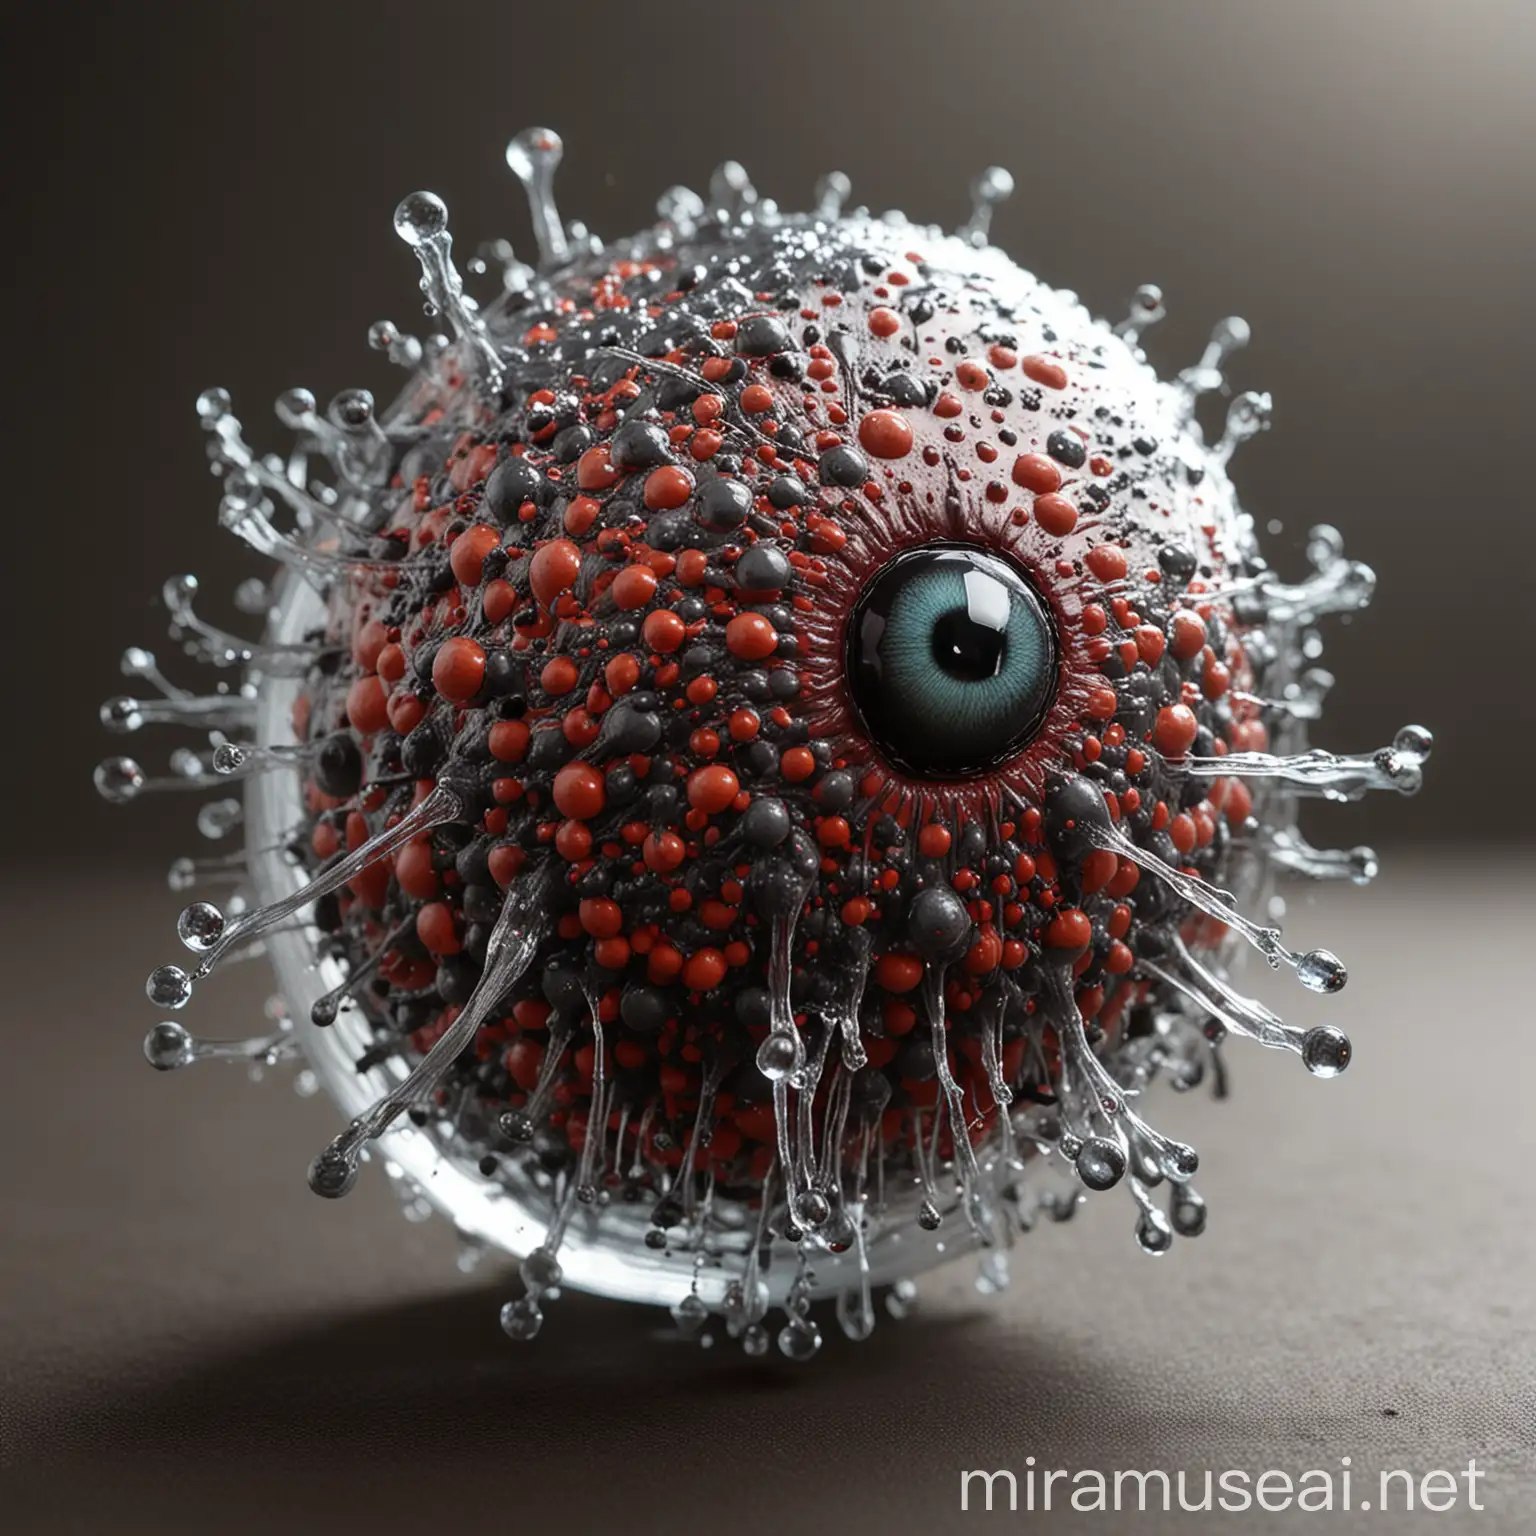 Viscous Agglutination of Rubber Cells FifteenFoot Monstrous Spheroids